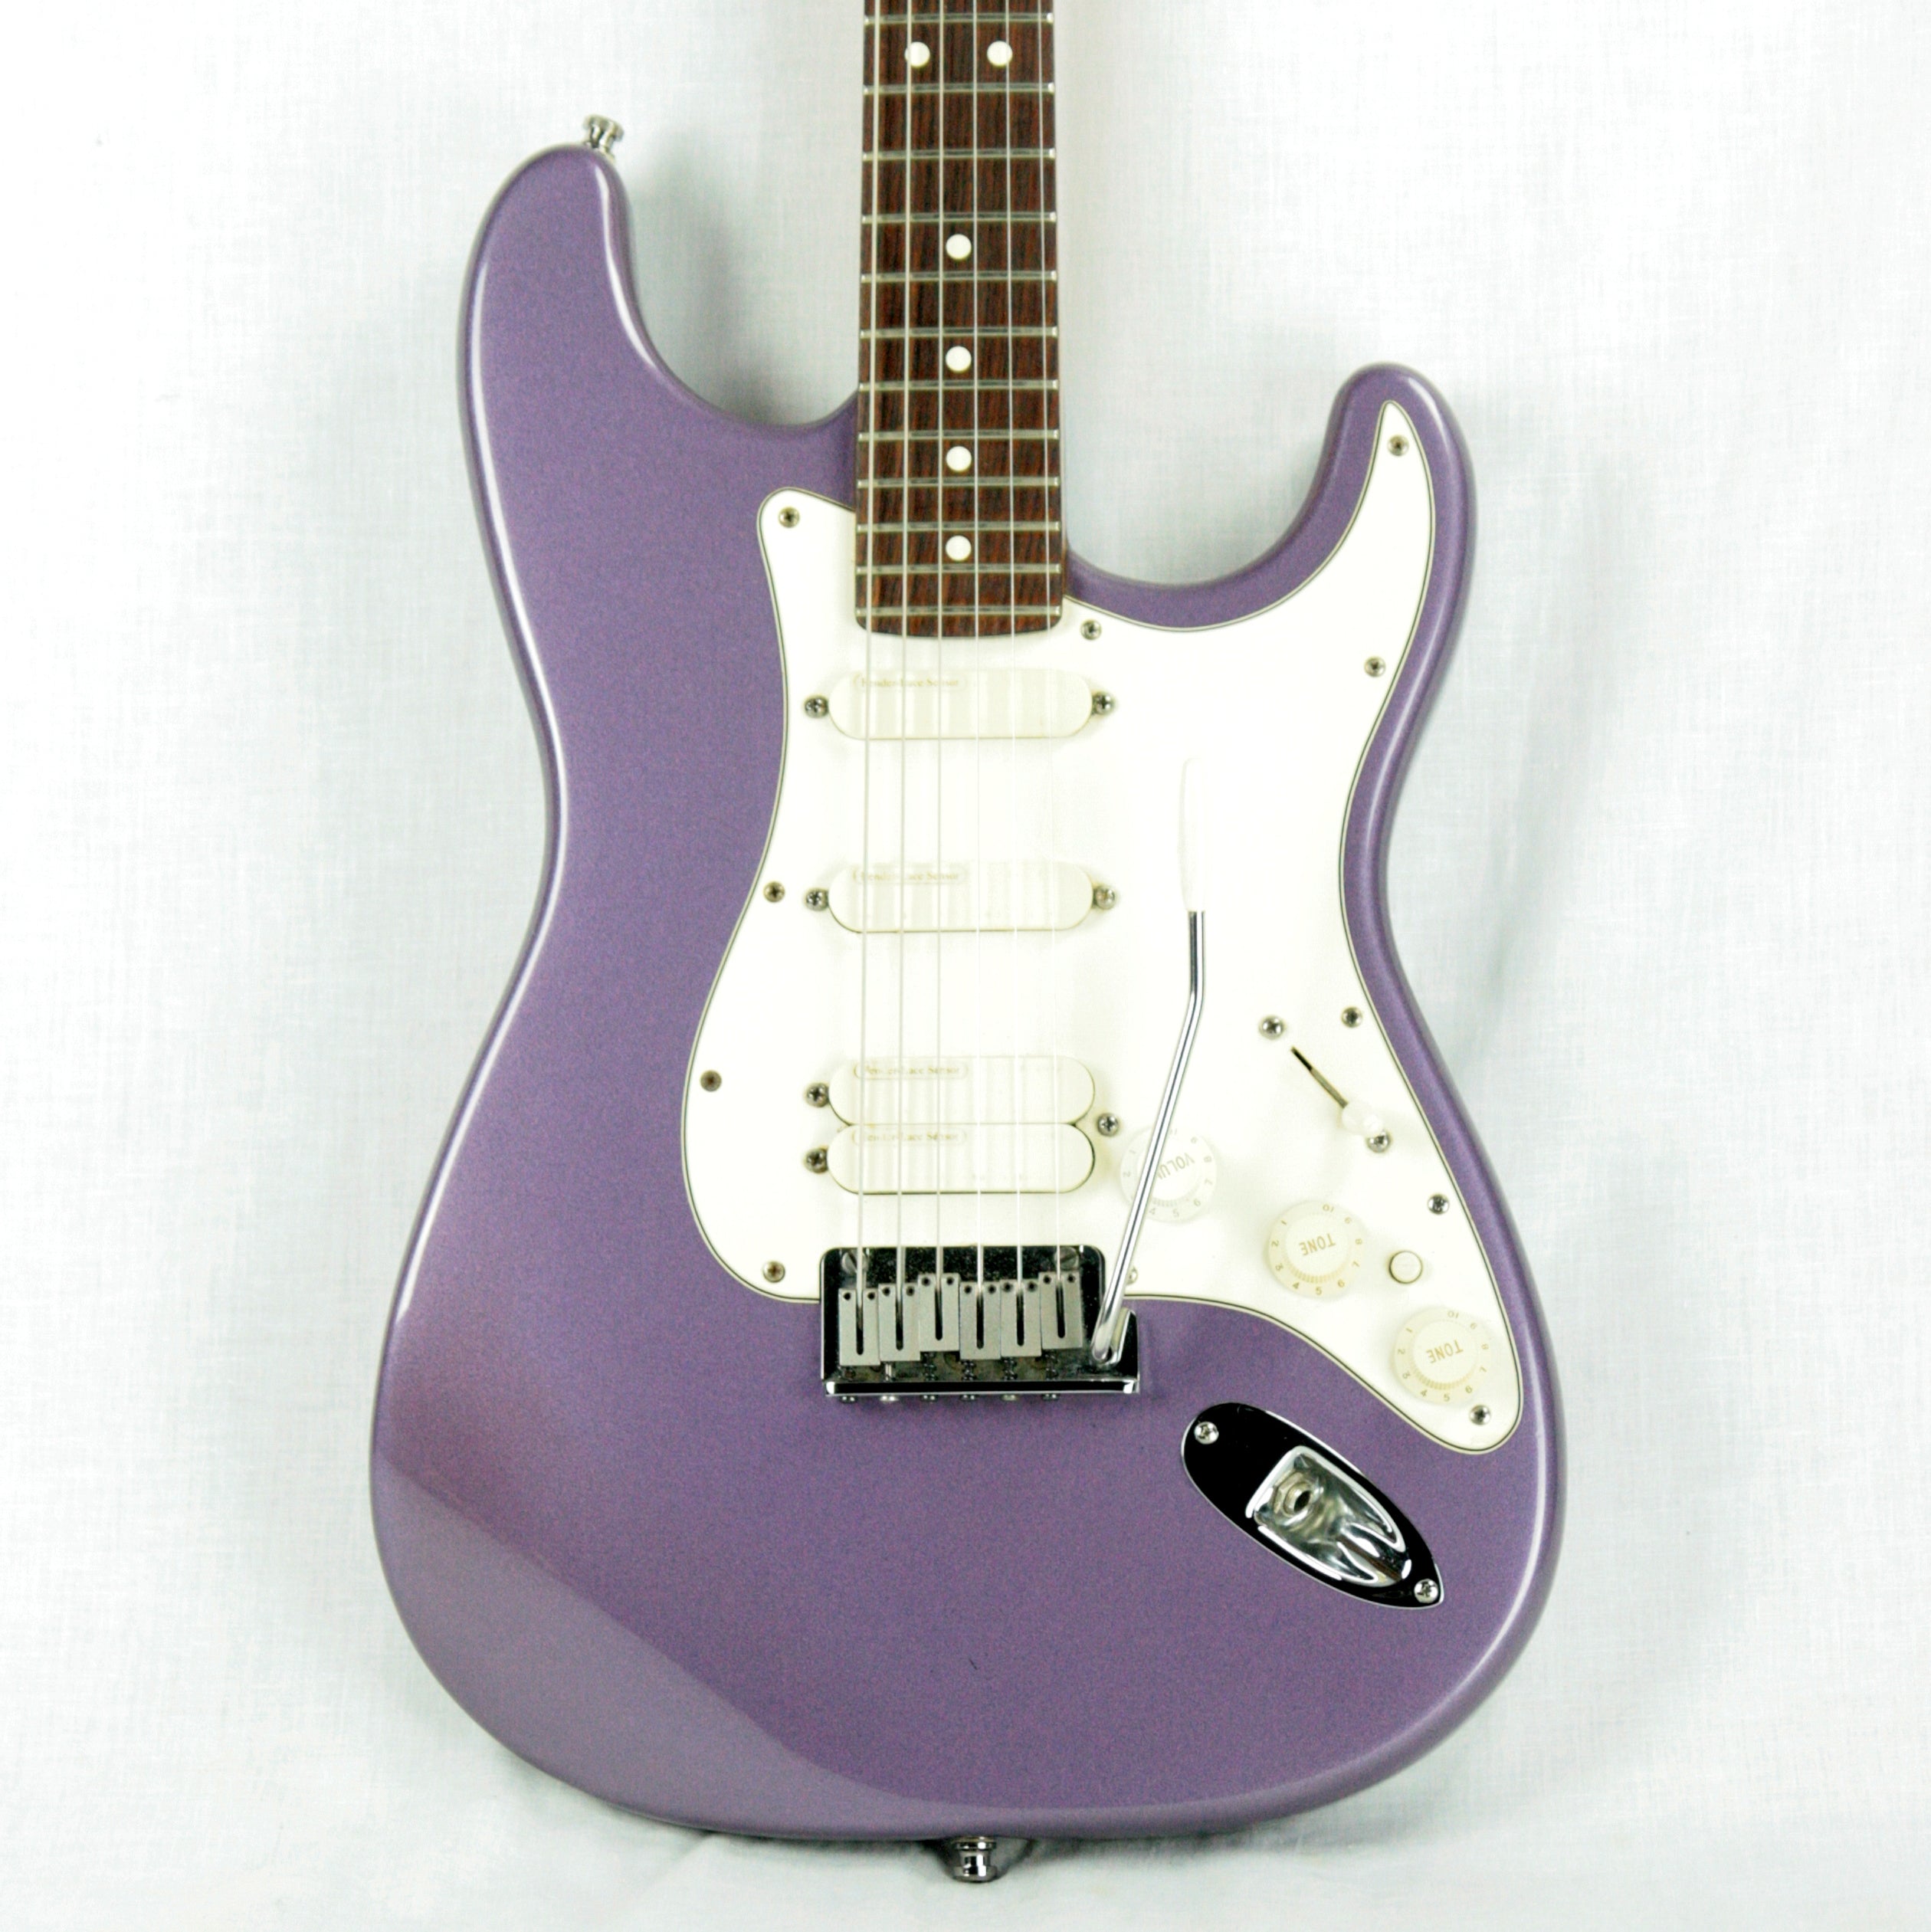 *SOLD*  1993 Fender Jeff Beck Stratocaster Midnight Purple! Fat-Neck Strat, Lace Sensors Ultra